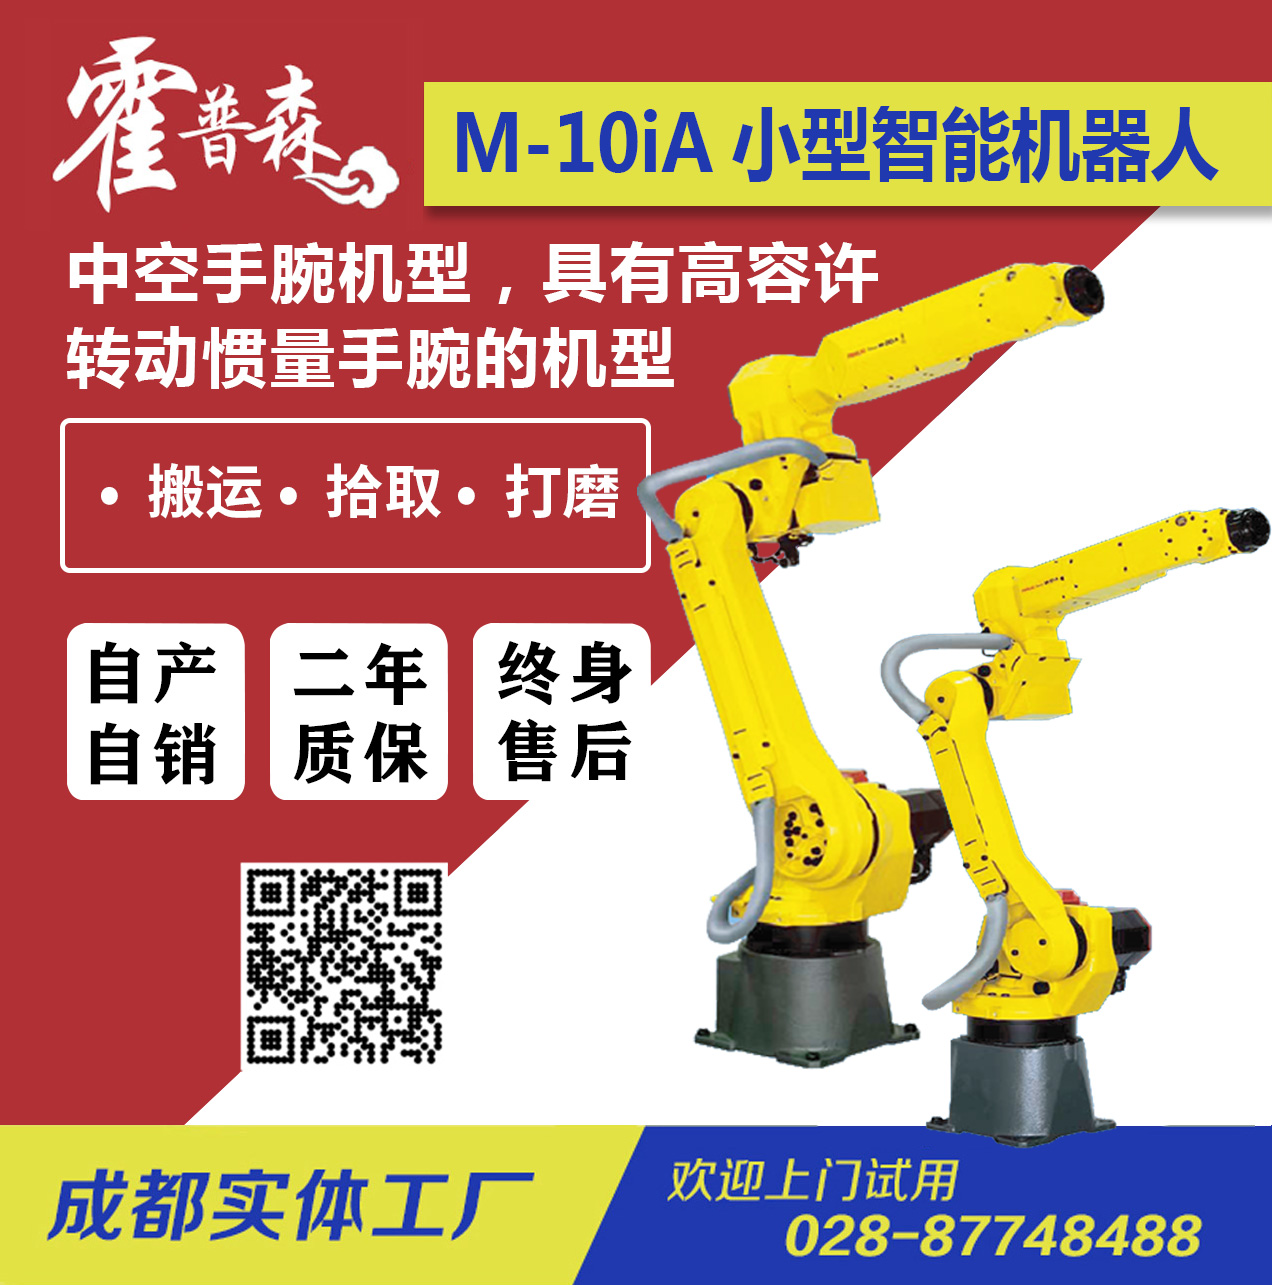 FANUC-Robot M-10iA /搬运/抛光/打磨/小工件拾取/小型智能机器人